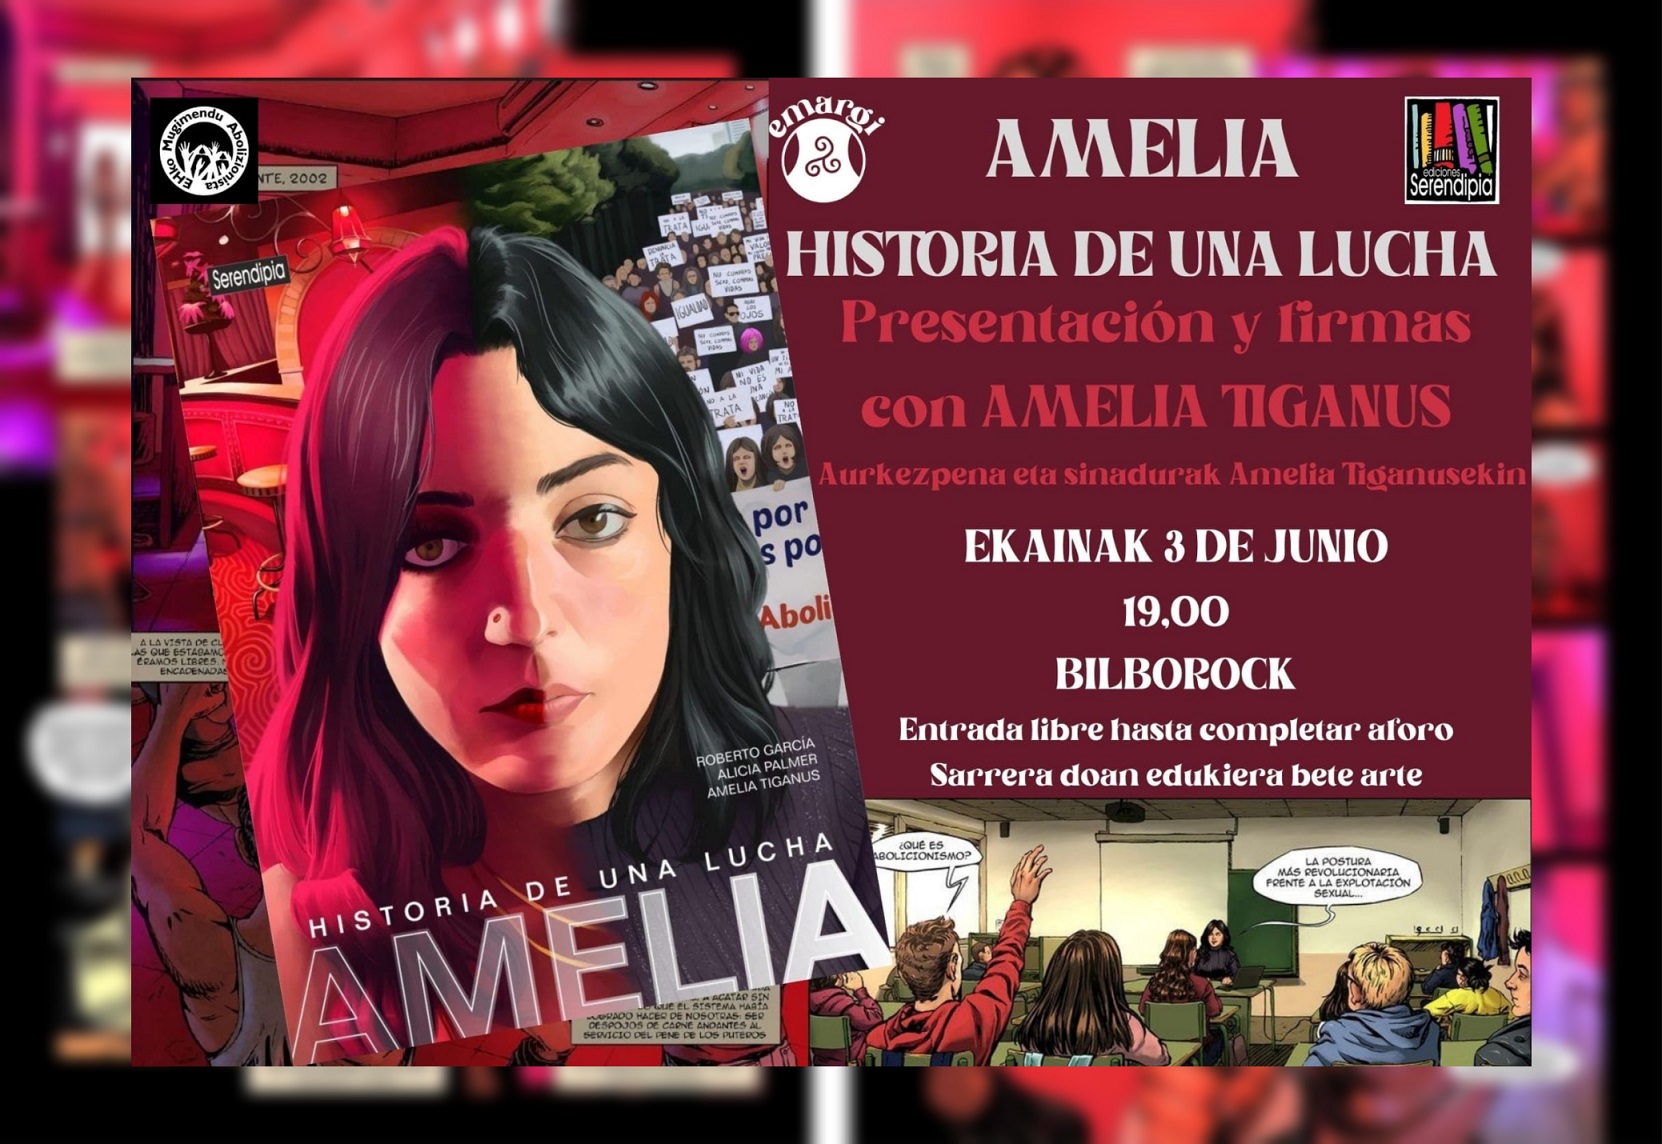 Amelia-tiganus-feminista-prostitución-abolición-cómic-historia-real-lucha-emargi-bilbao-bilborock-EuskalHerriko-Mugimendu-Abolizionista